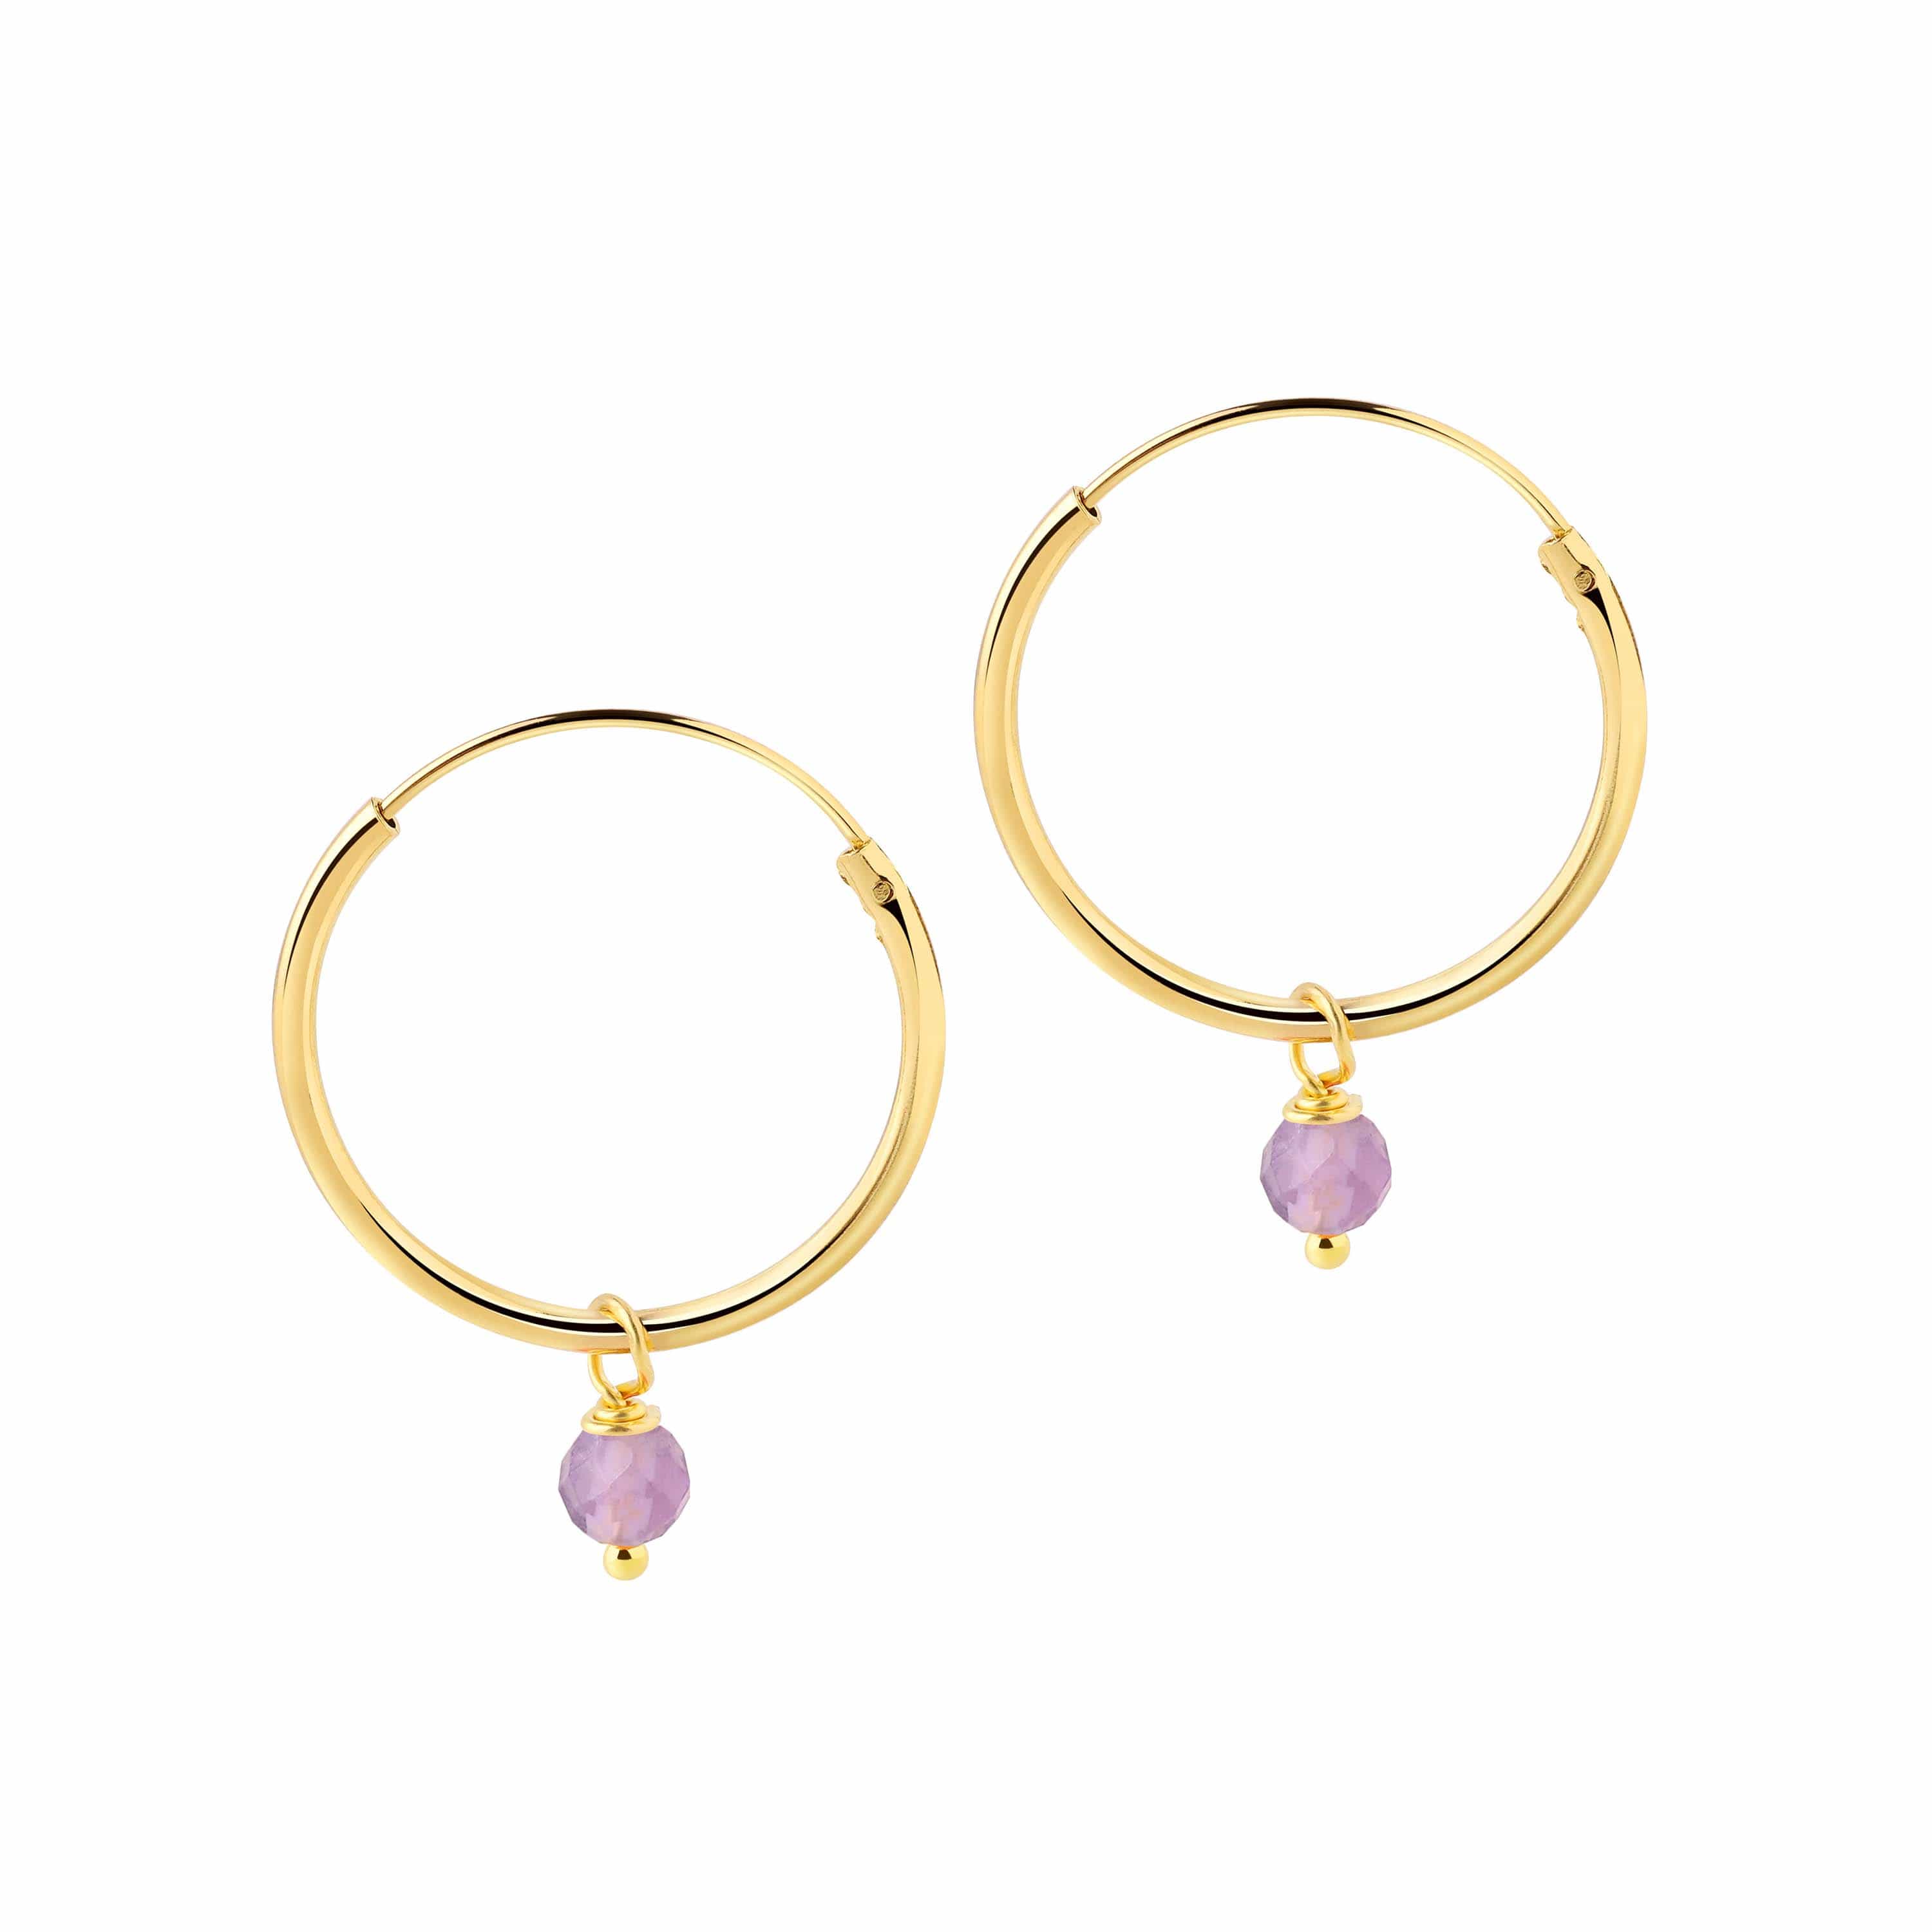 Medium Gold Plated Hoop Earrings with Purple Stone